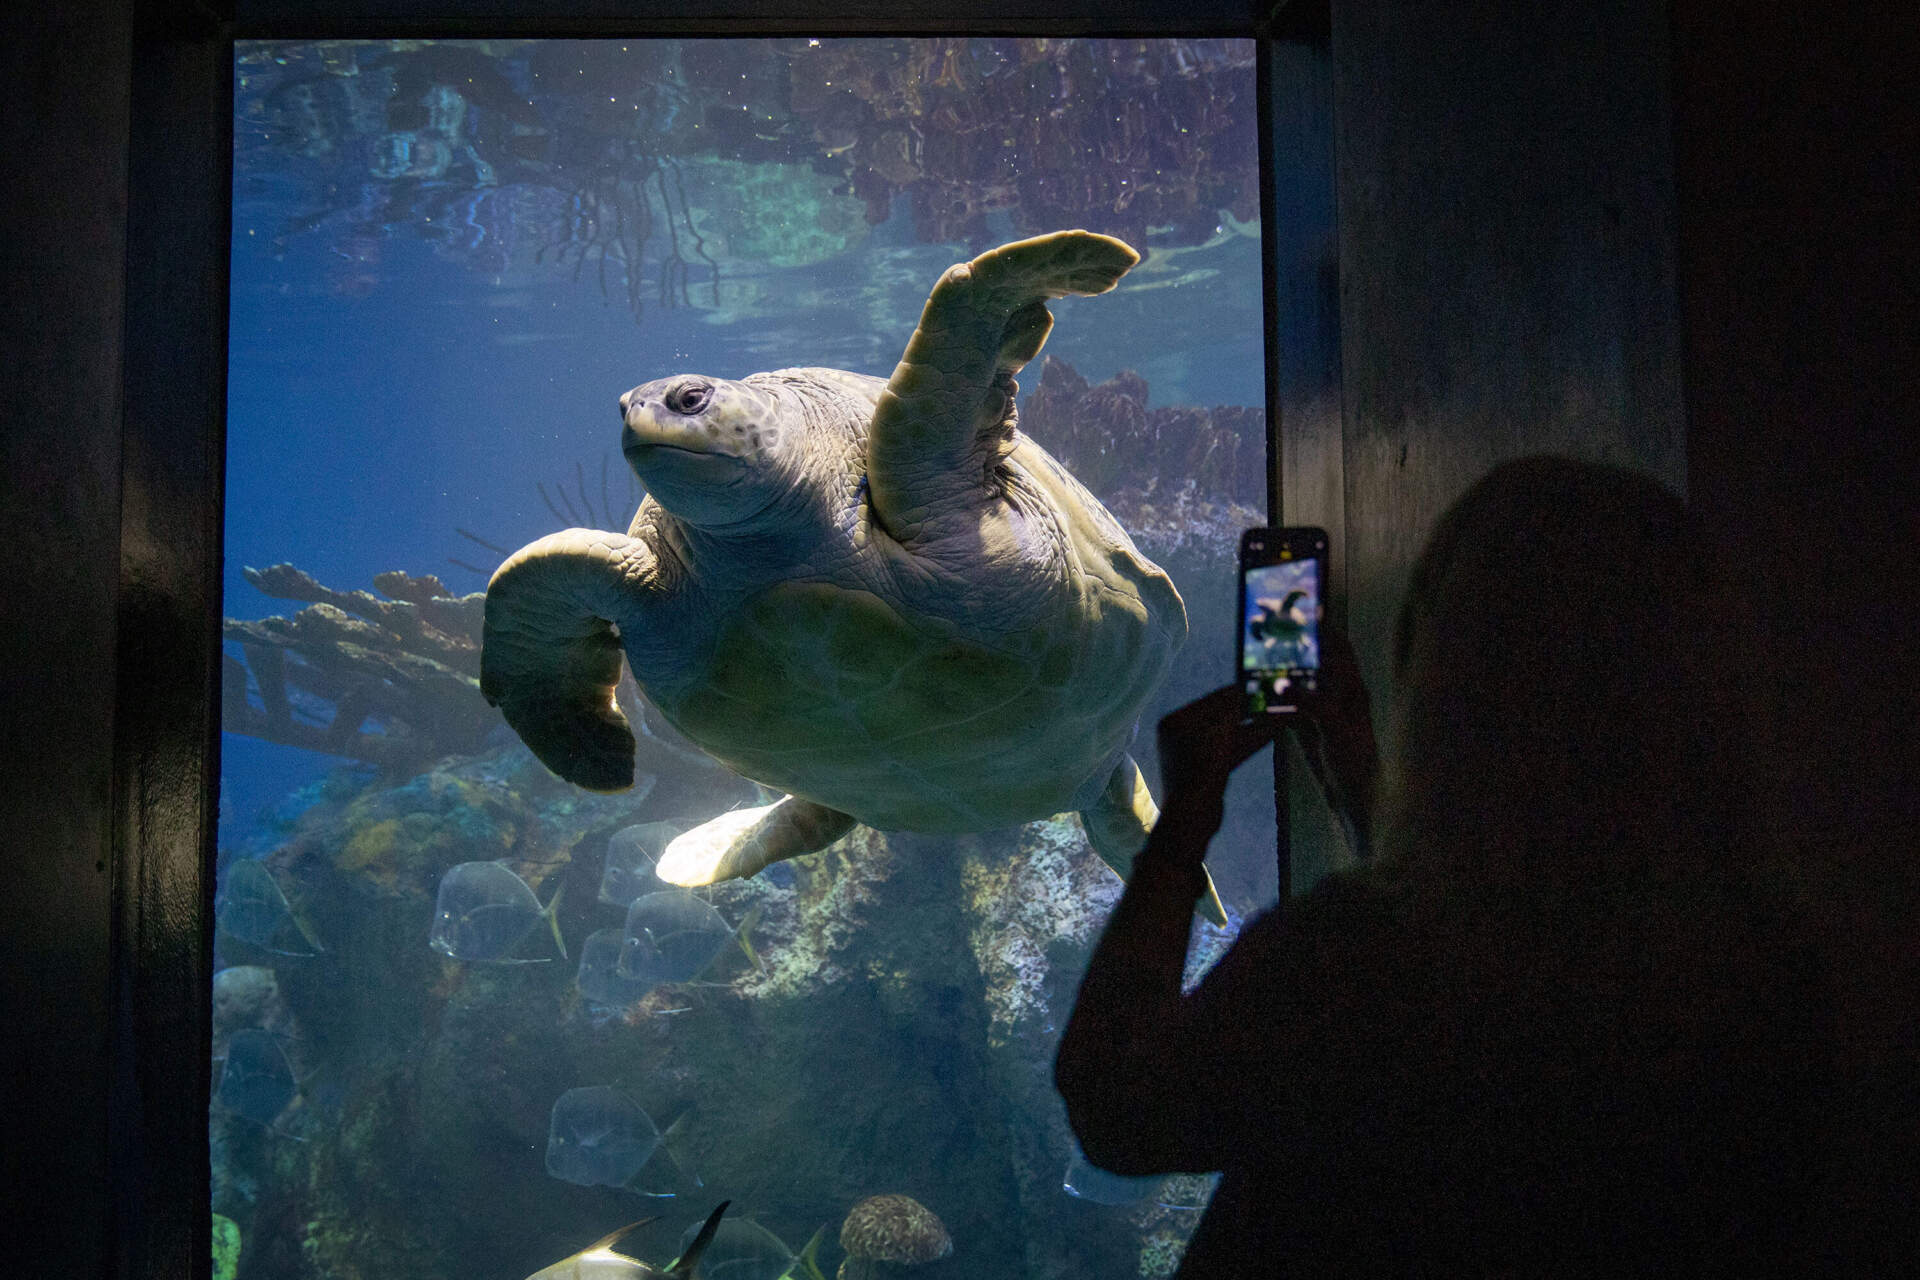 Myrtle swims by an aquarium visitor. (Robin Lubbock/WBUR)